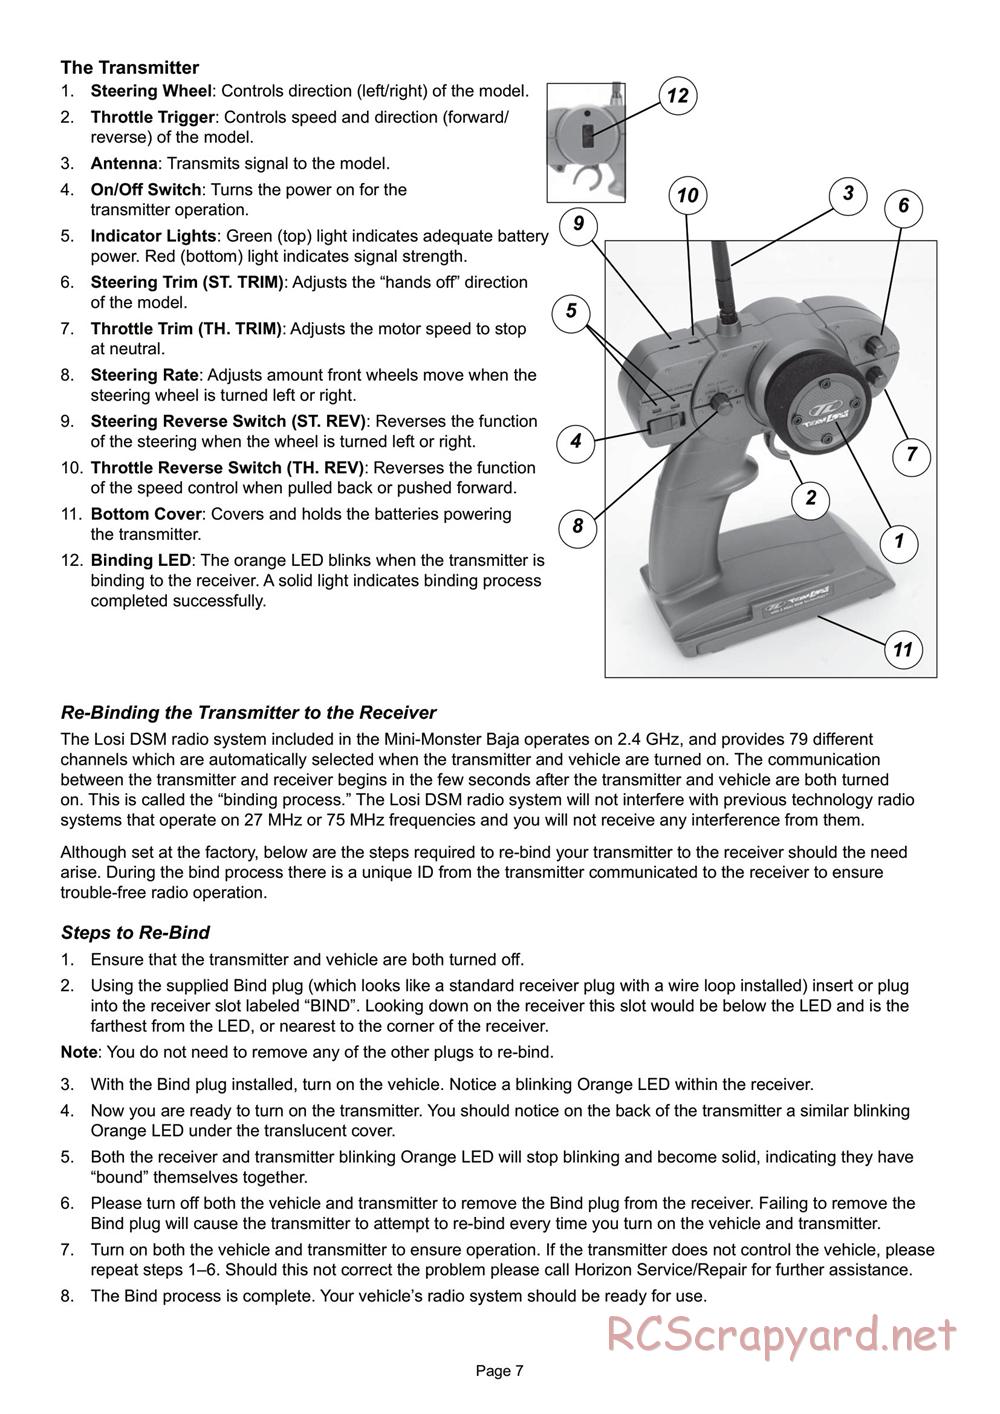 Team Losi - Mini Monster Baja - Manual - Page 6